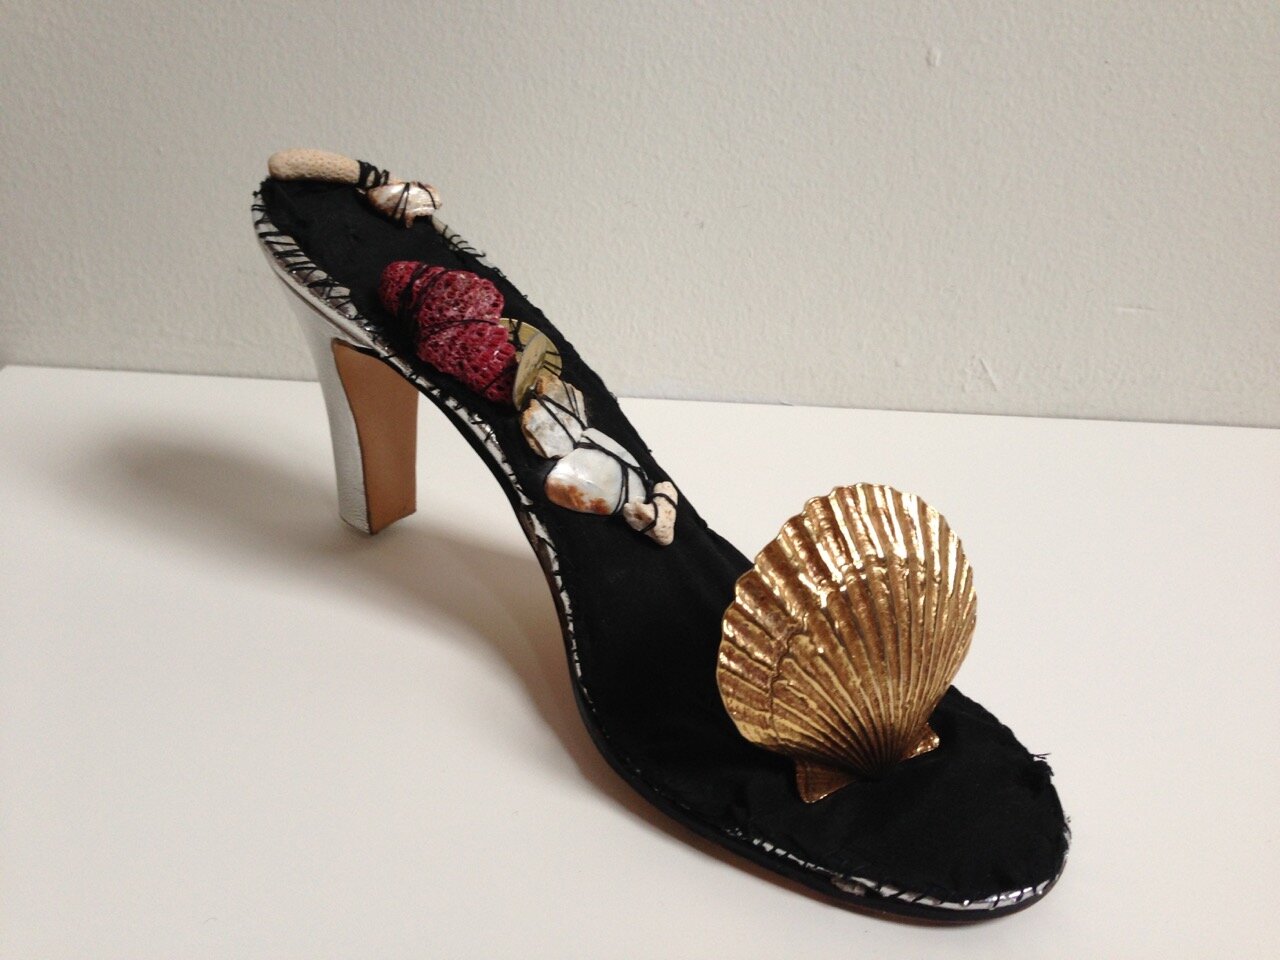   Sea Shoe , 2013  shoe, silk, coral, shells, jewelry parts, thread 